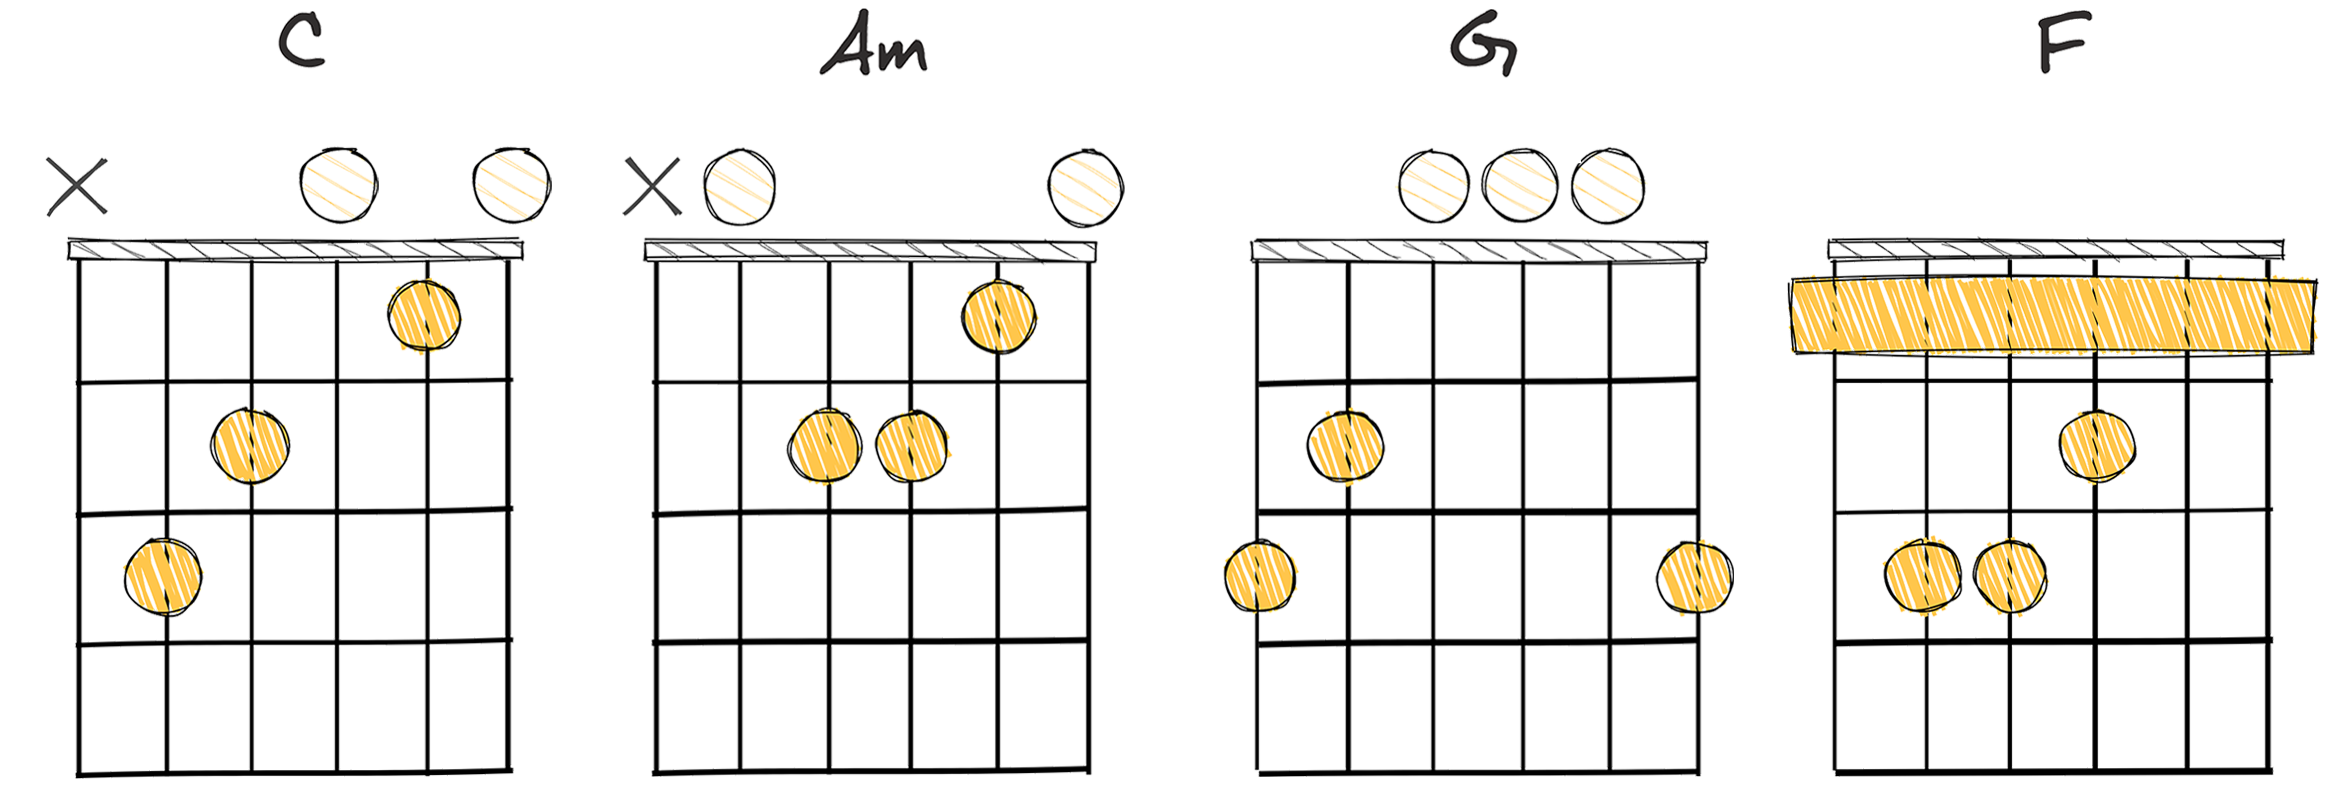 I-VI-V-IV (1-6-5-4) chords diagram